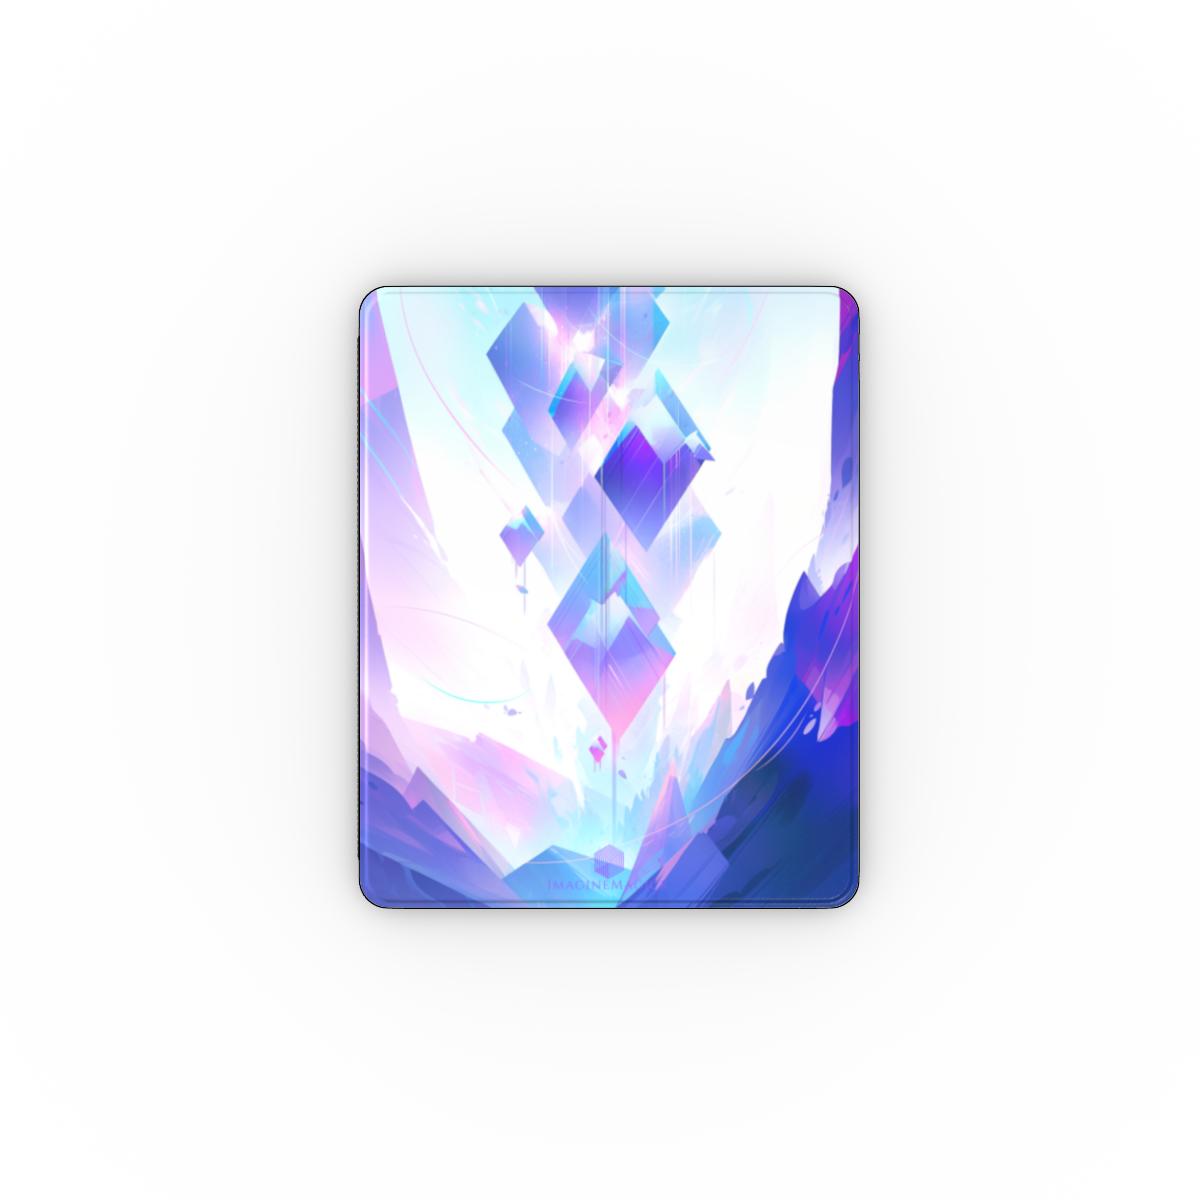 iPad Enchantment - Illusion of diamonds